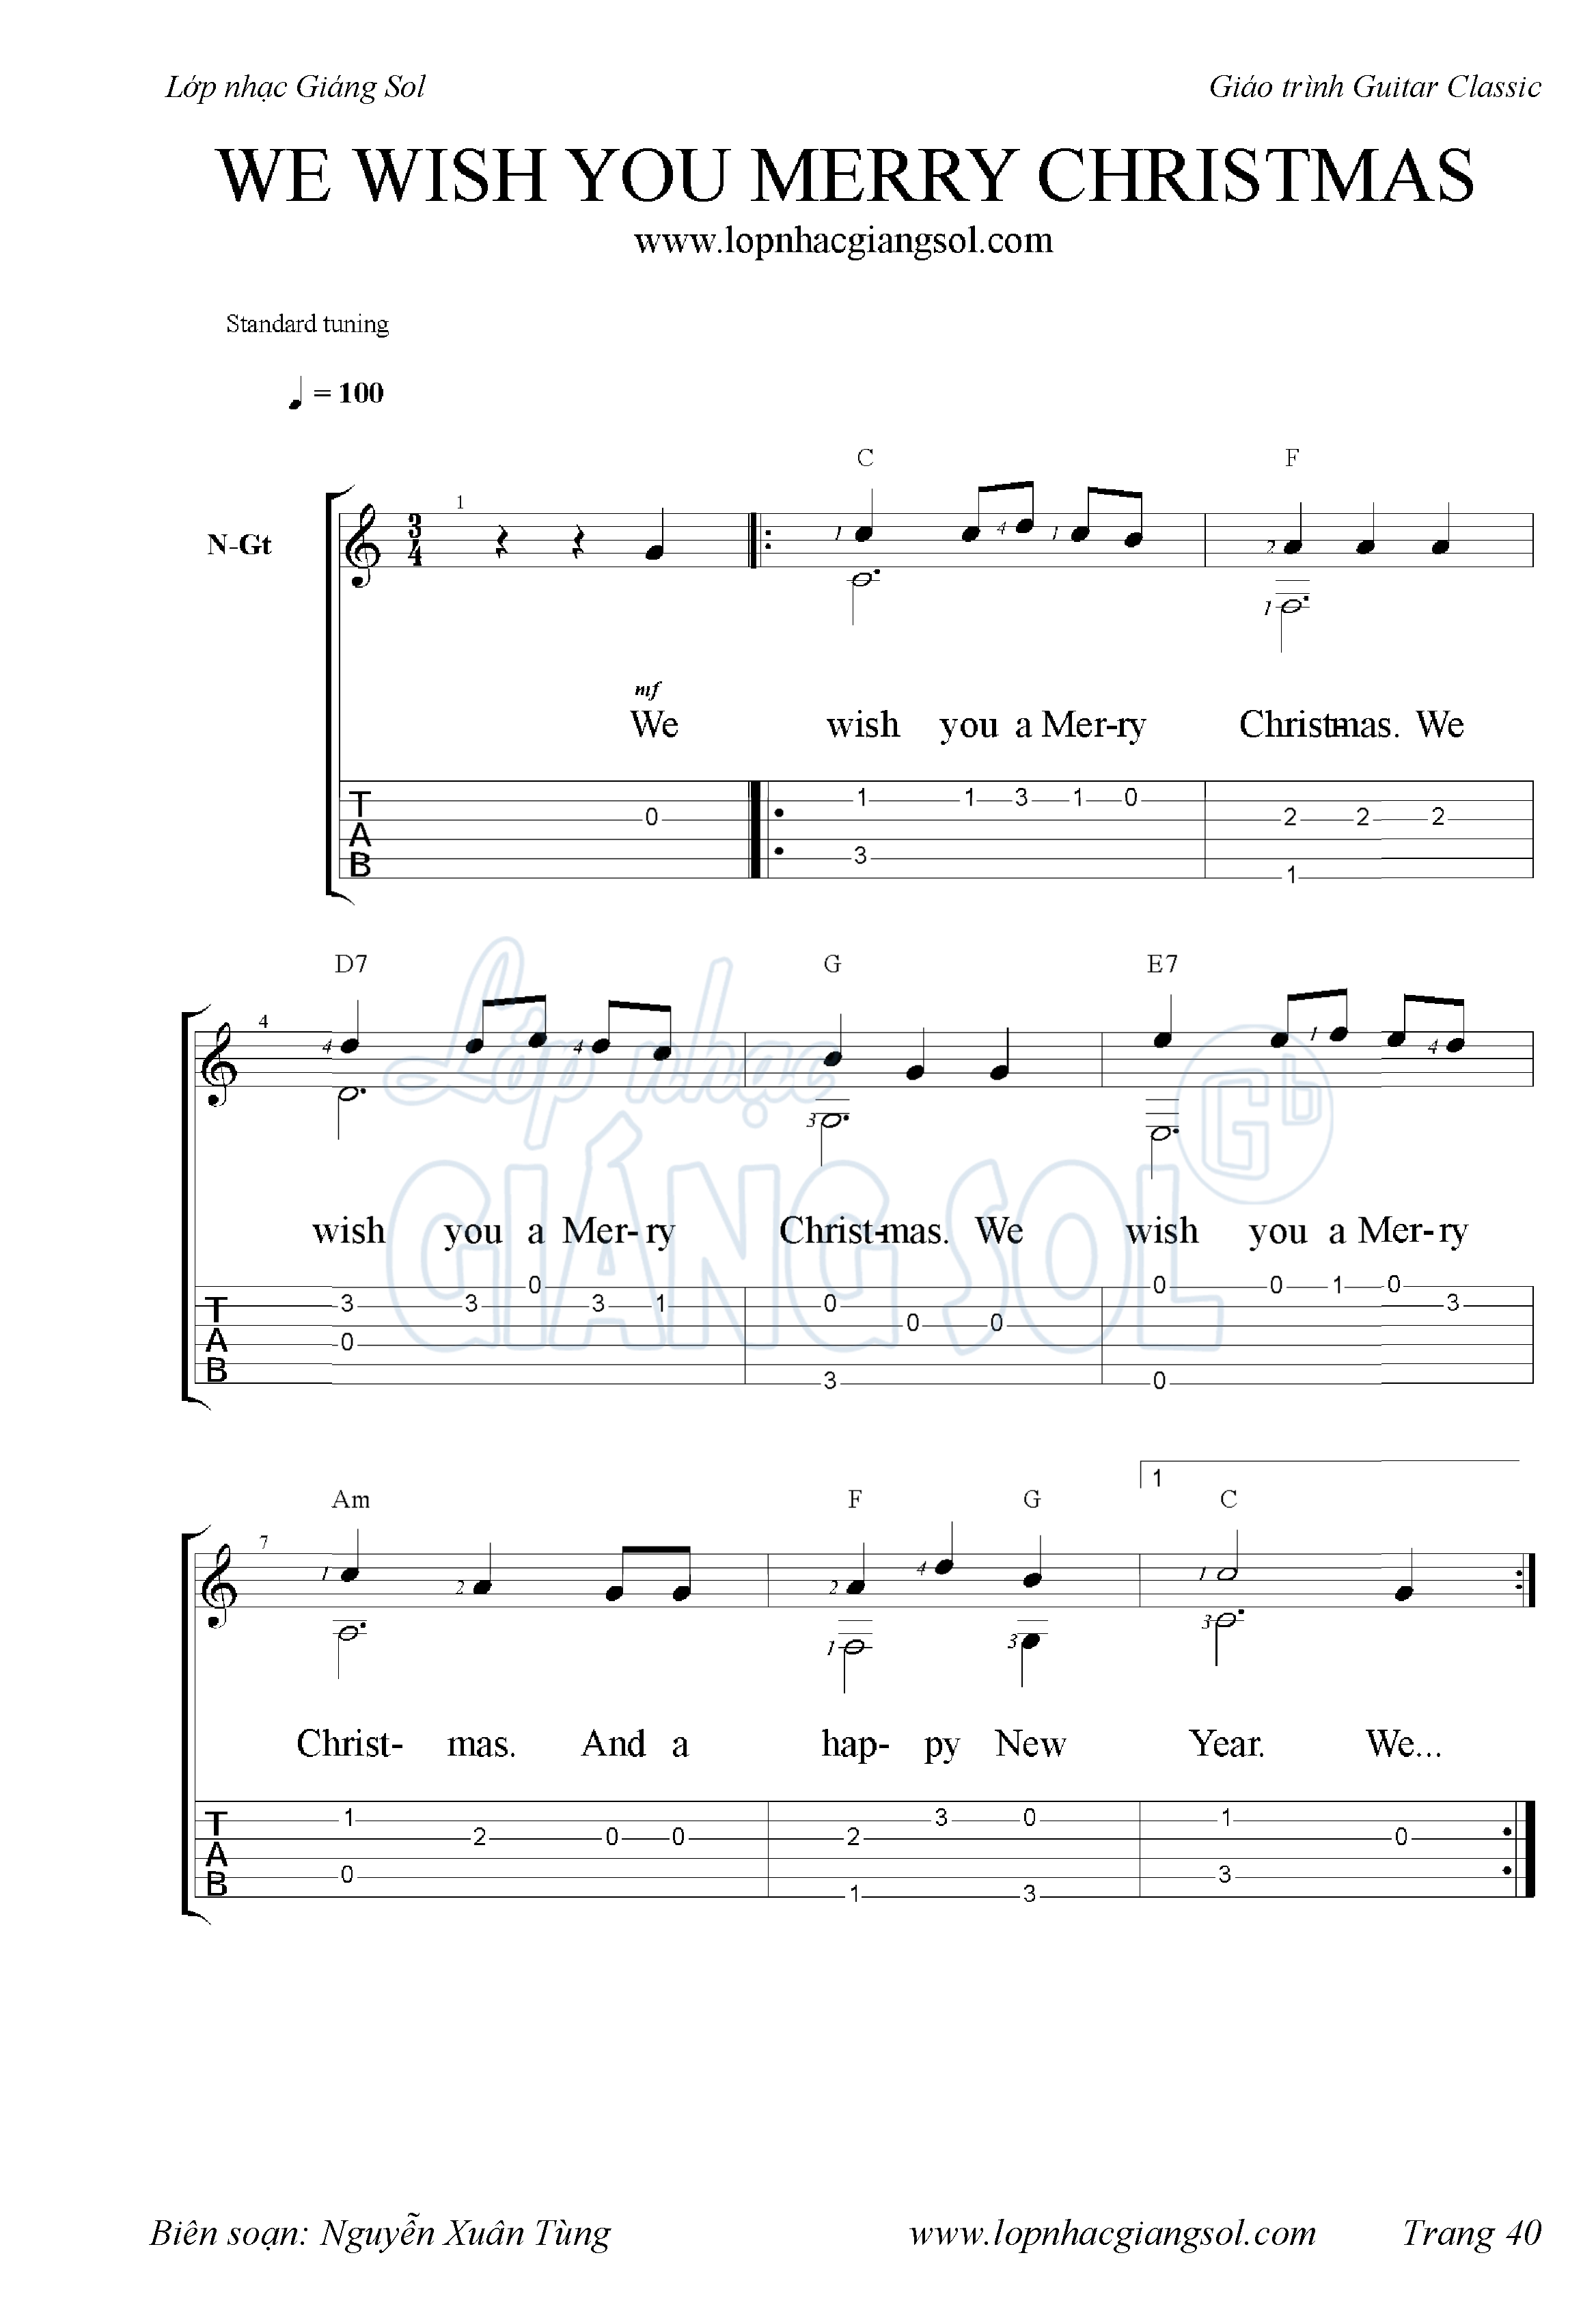 Merry Christmas吉他谱 - Bryan Adams - C调吉他弹唱谱 - 和弦谱 - 琴谱网